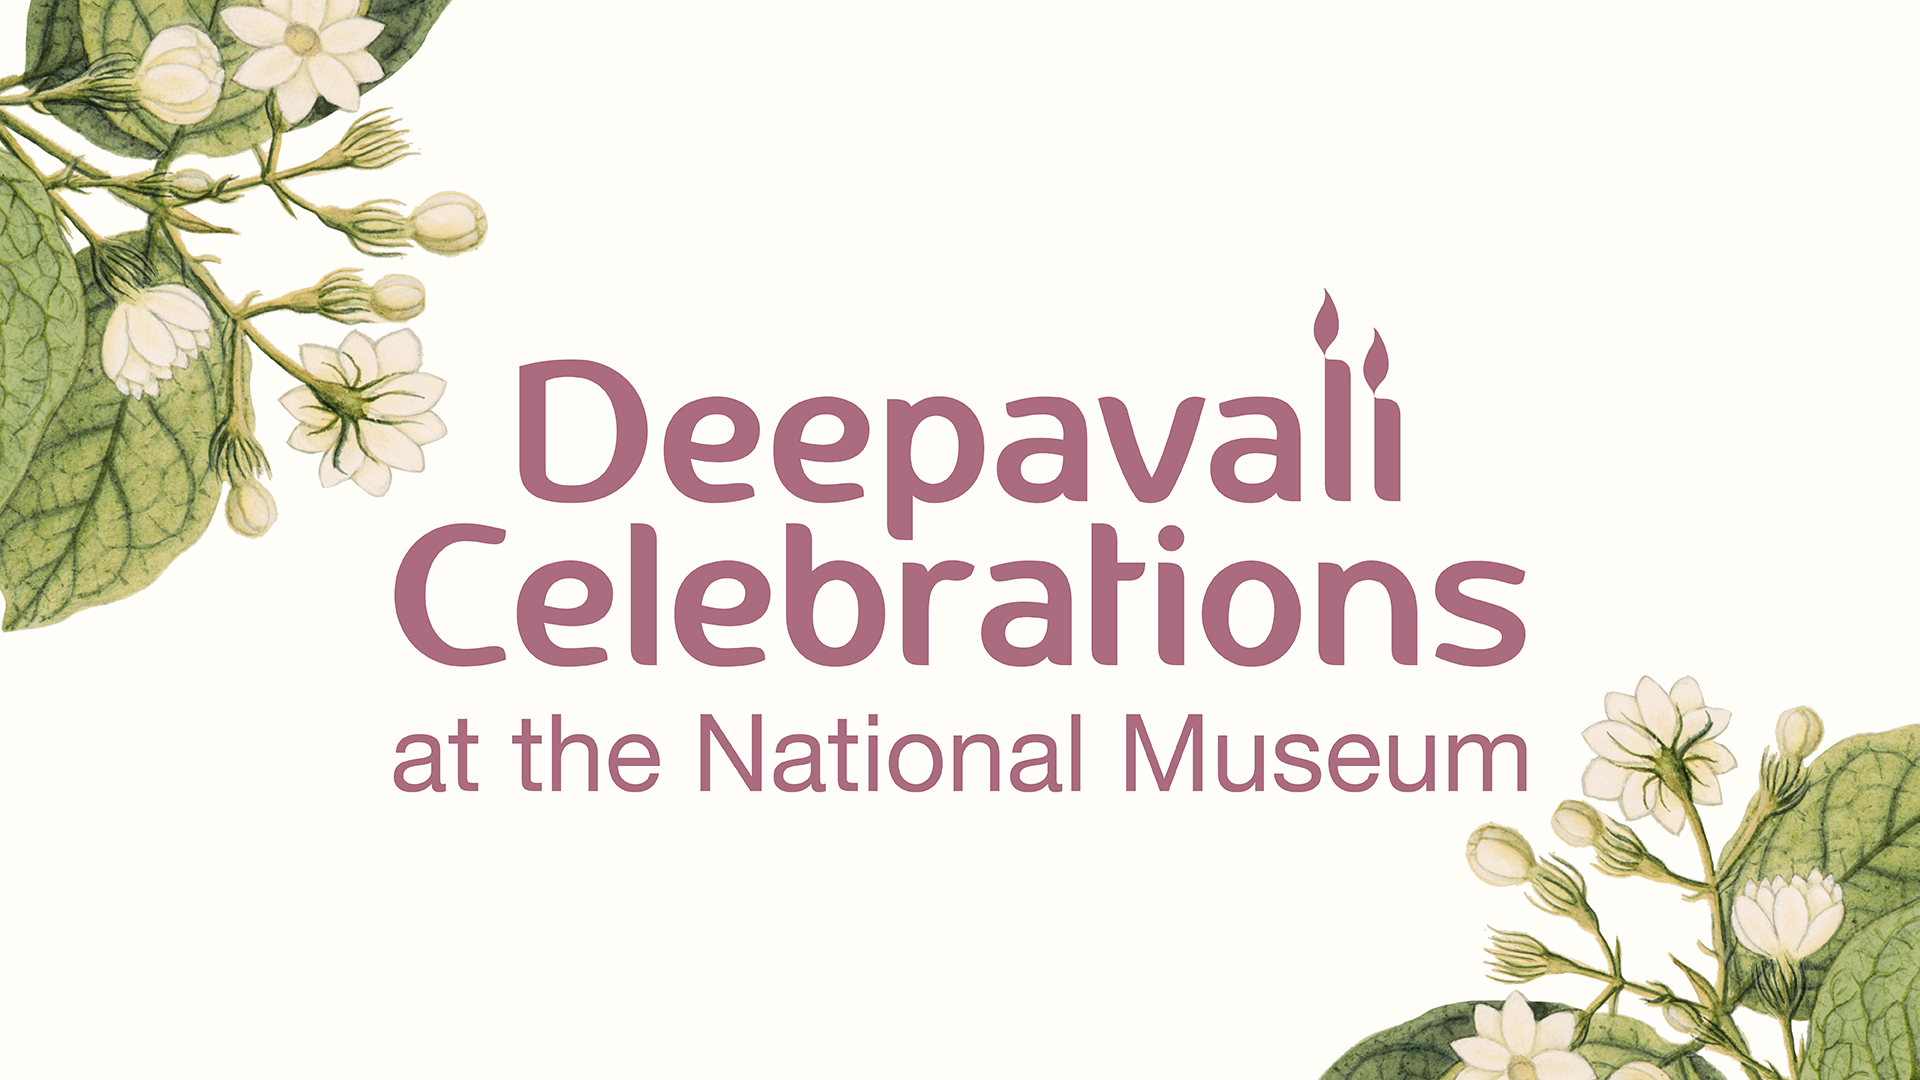 Deepavali celebrations